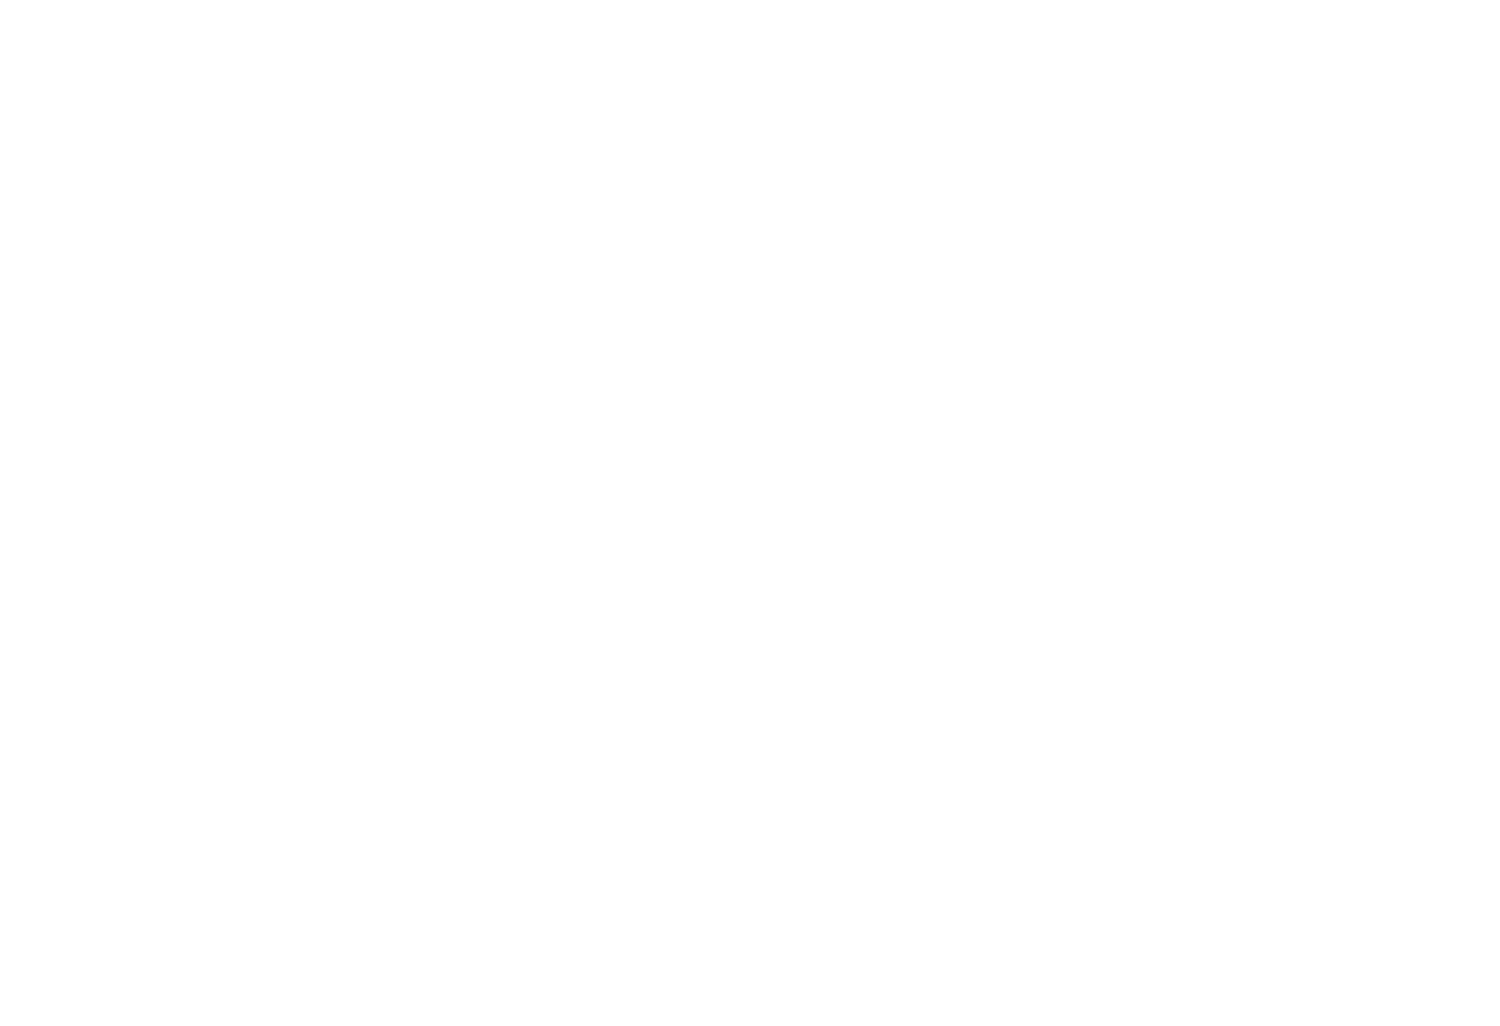 Victor Fox Photography